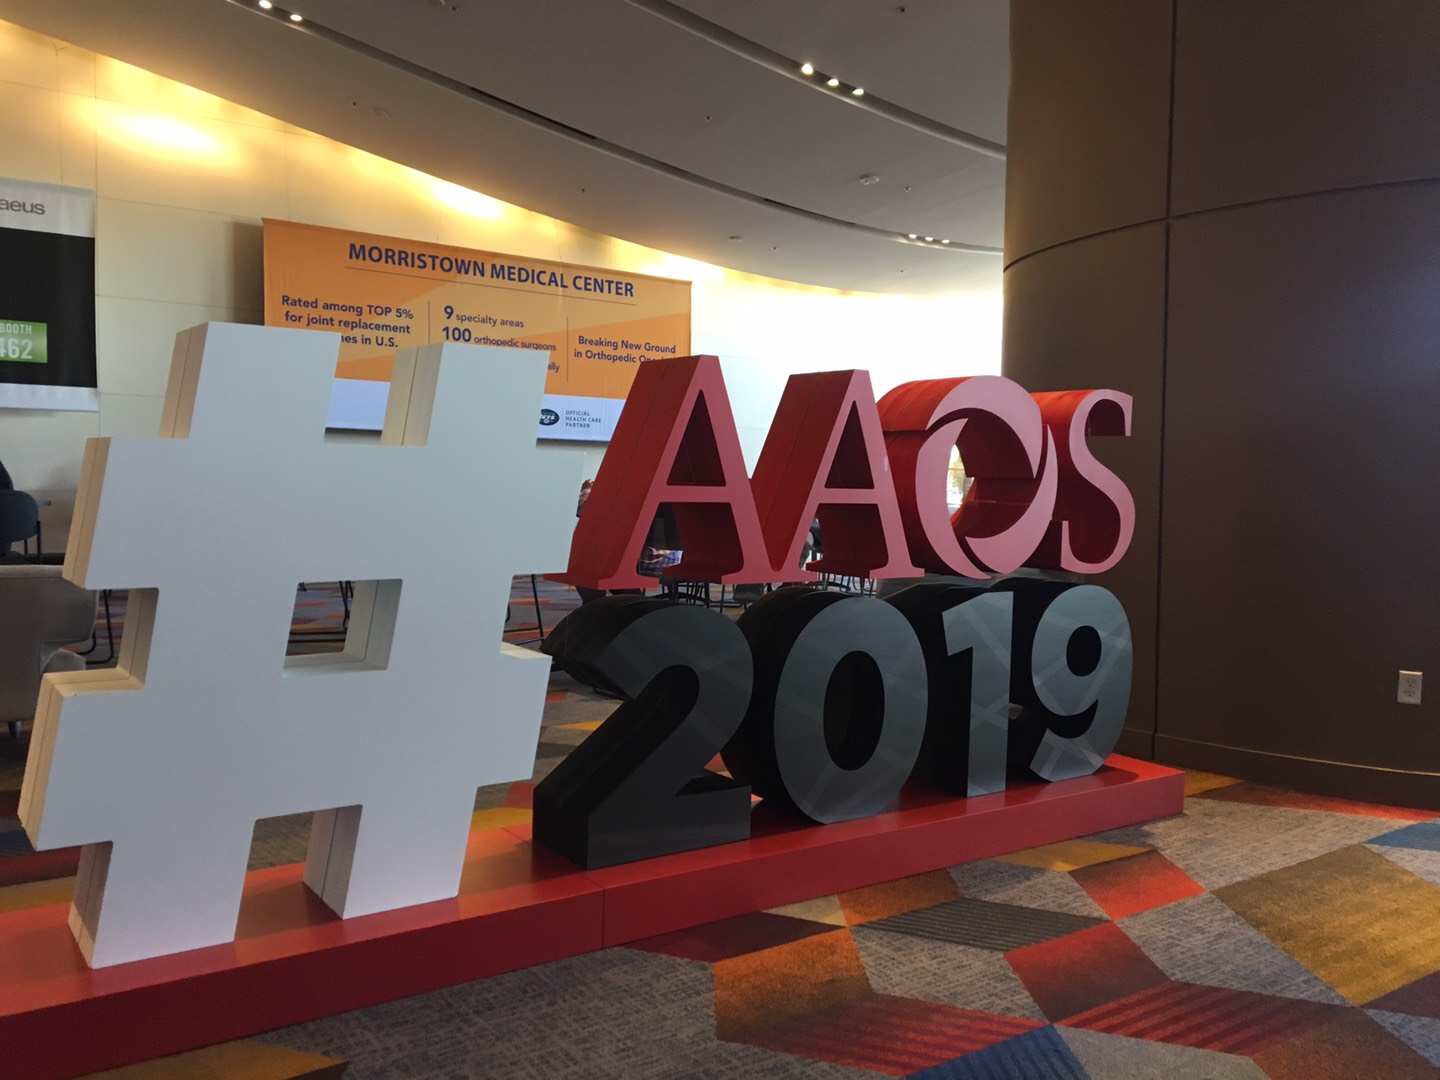 AAOS Annual Meeting 2019